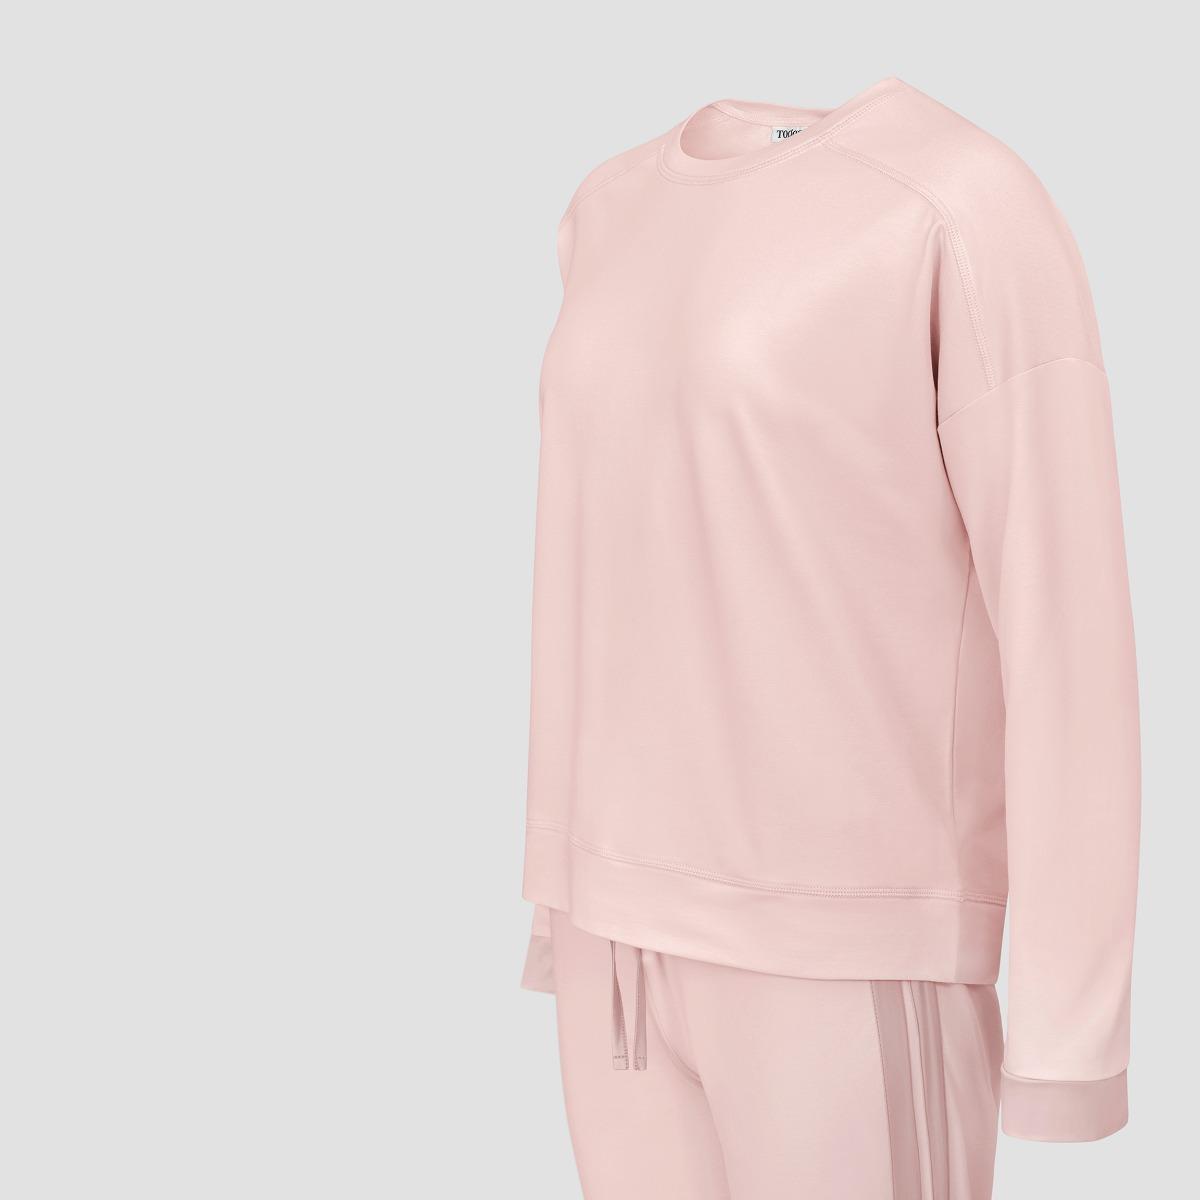 Пижама Togas Рене розовая женская xl(50), цвет розовый, размер XL (50) - фото 2